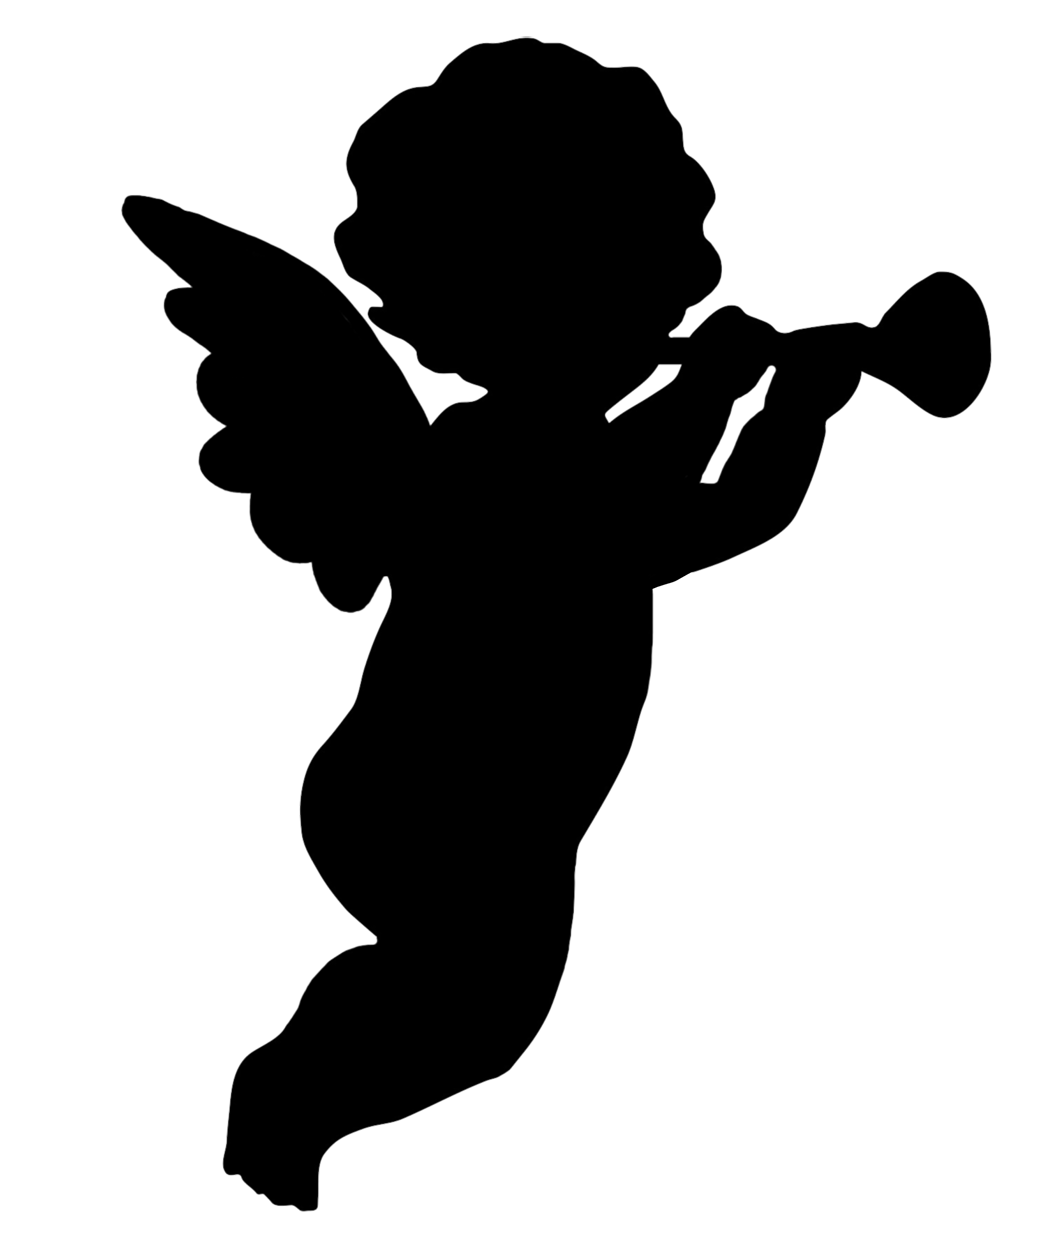 Cherub silhouette angel.